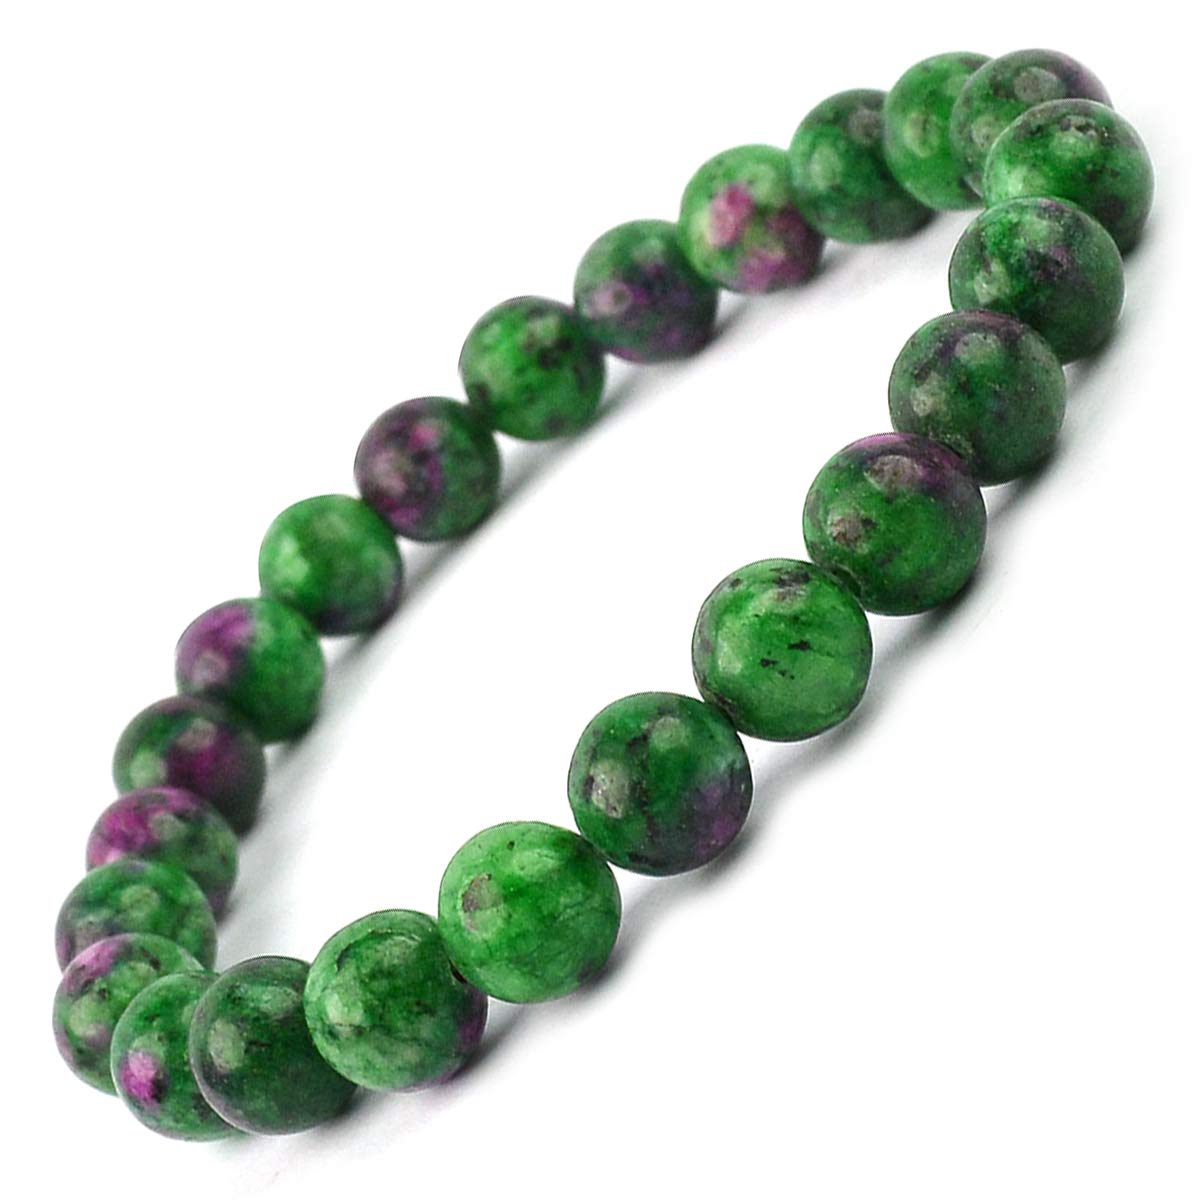 Ruby Zoisite Natural Healing Crystal Bracelet - 8mm Round Beads - Beaded Bracelet